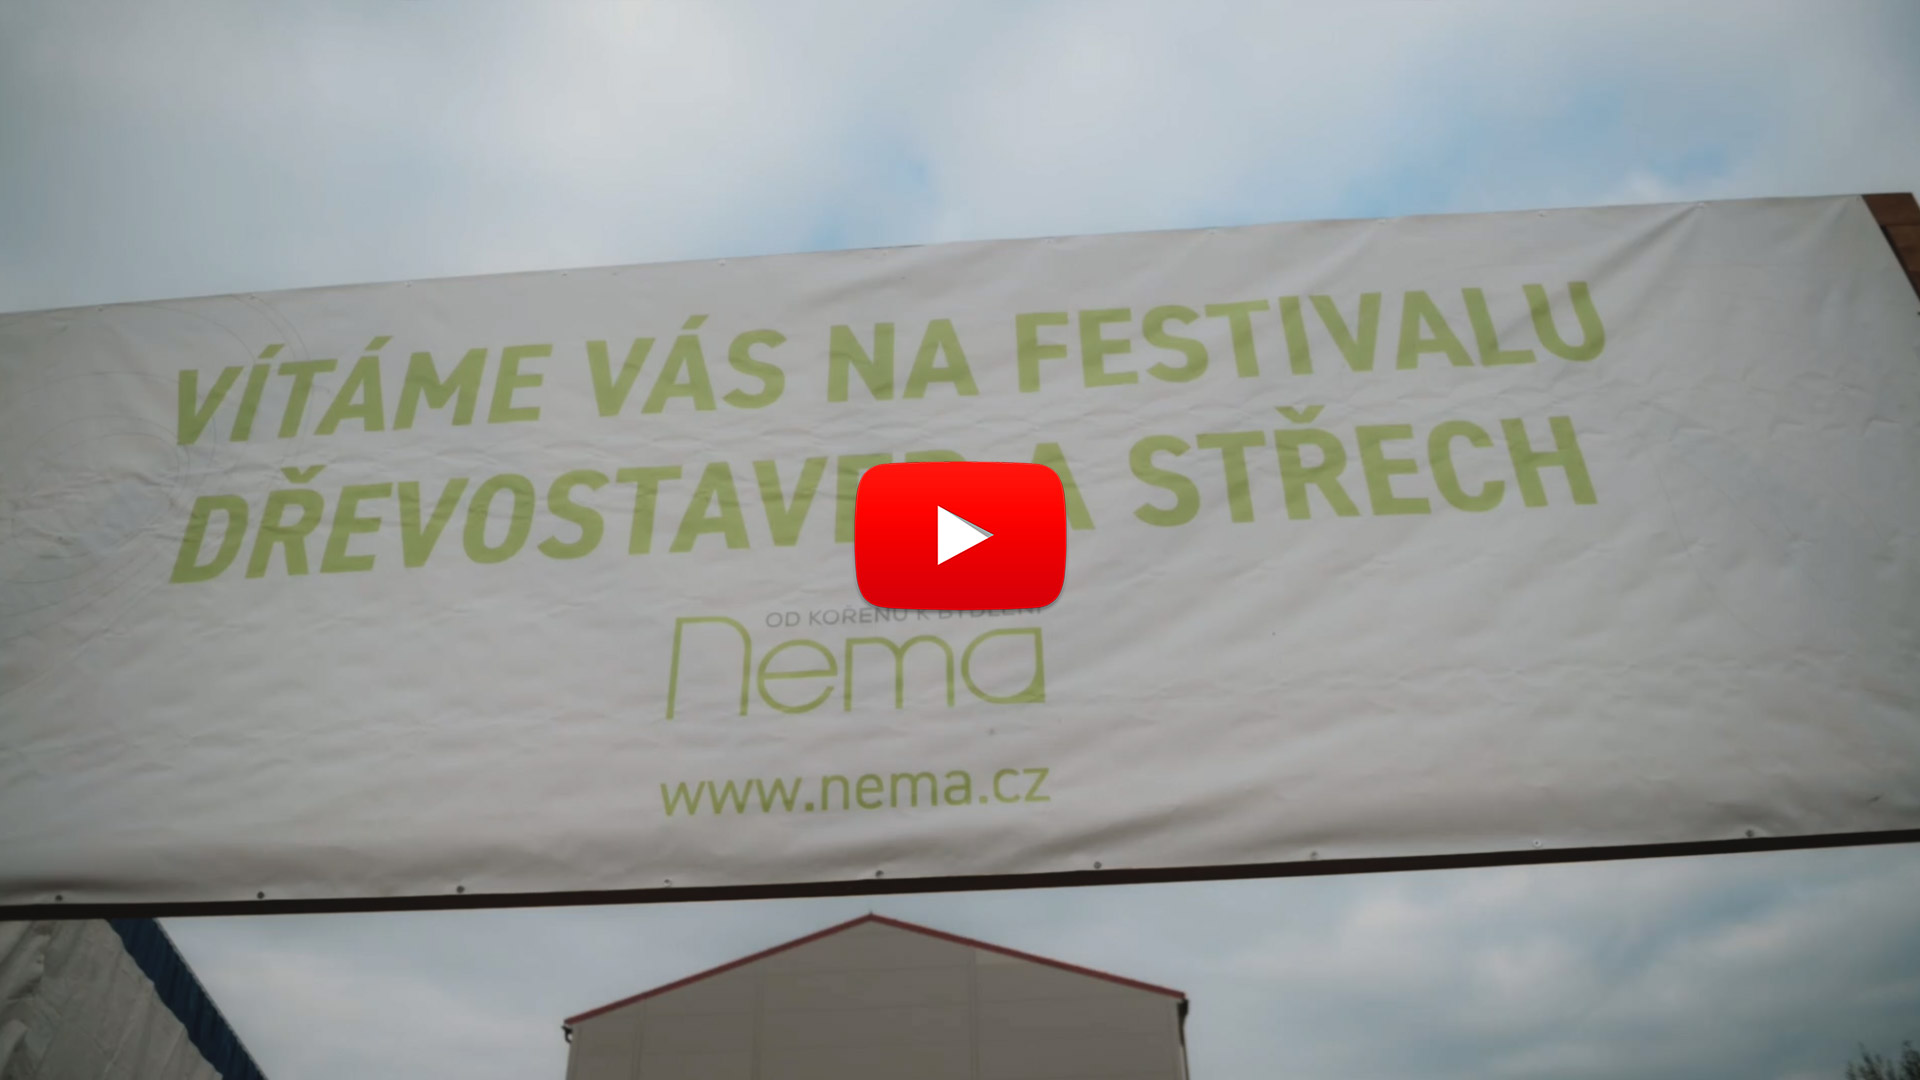 festival-drevostaveb-a-strech-video-after.jpg